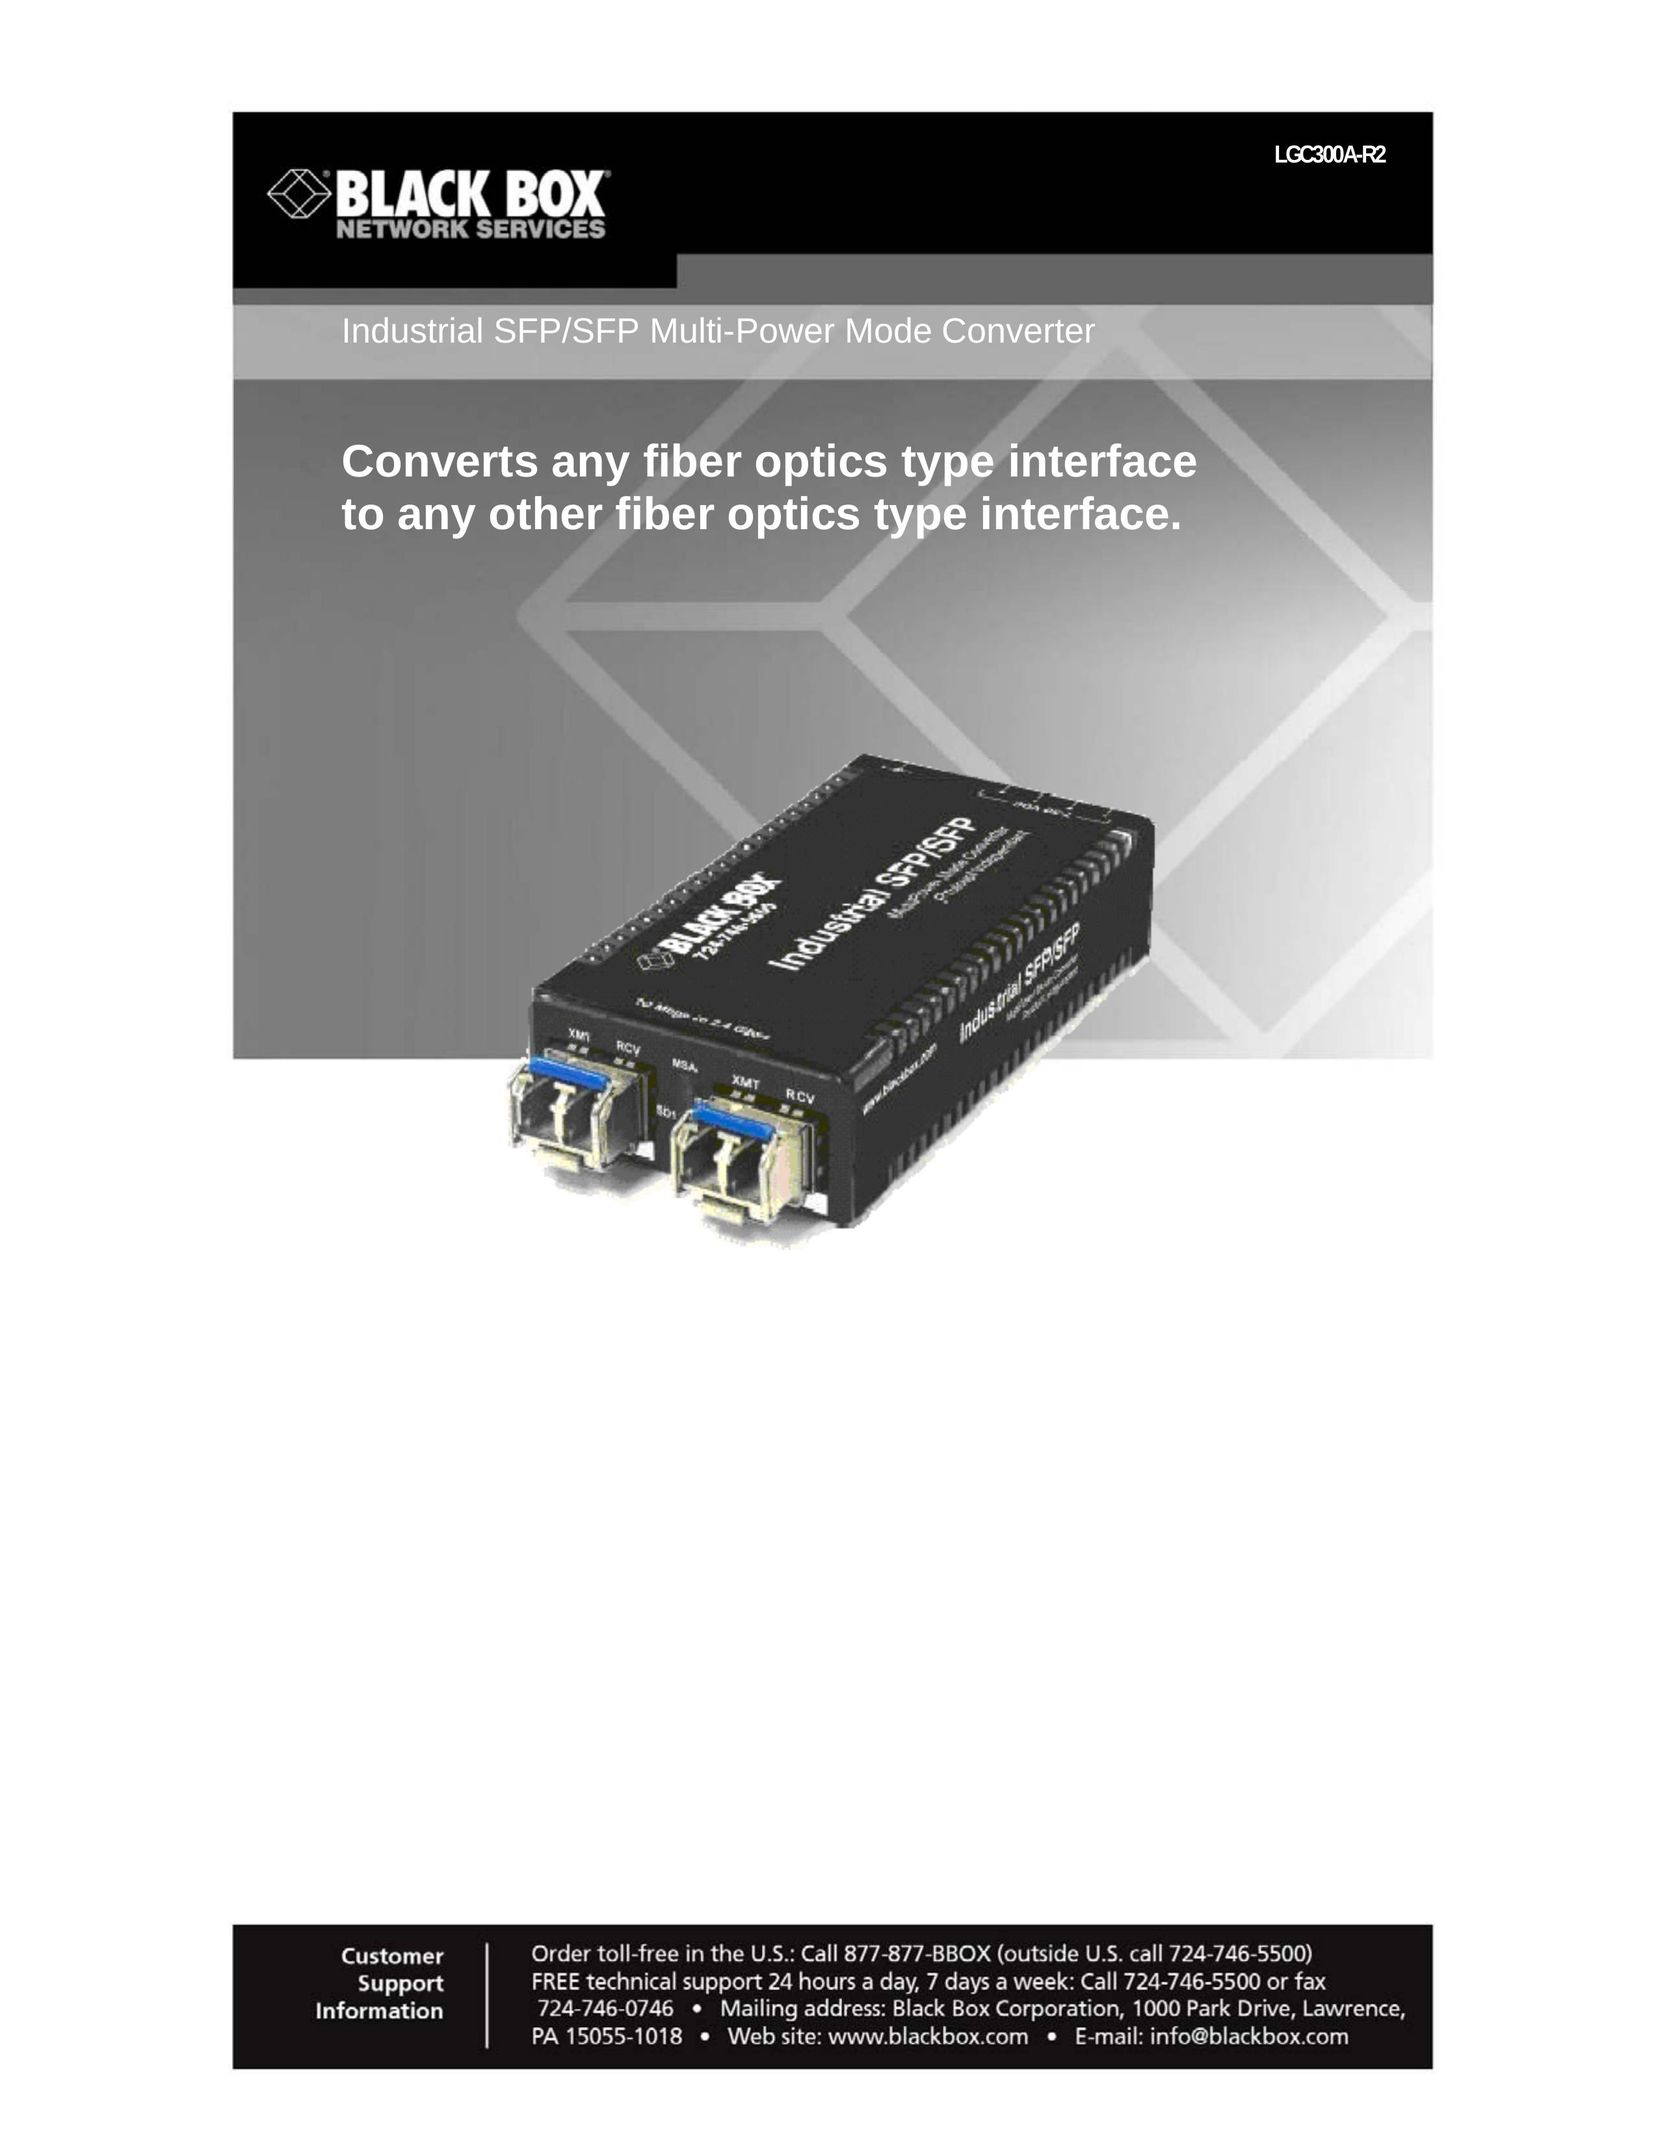 Black Box Industrial SFP/SFP Multi-Power Mode Converter TV Converter Box User Manual